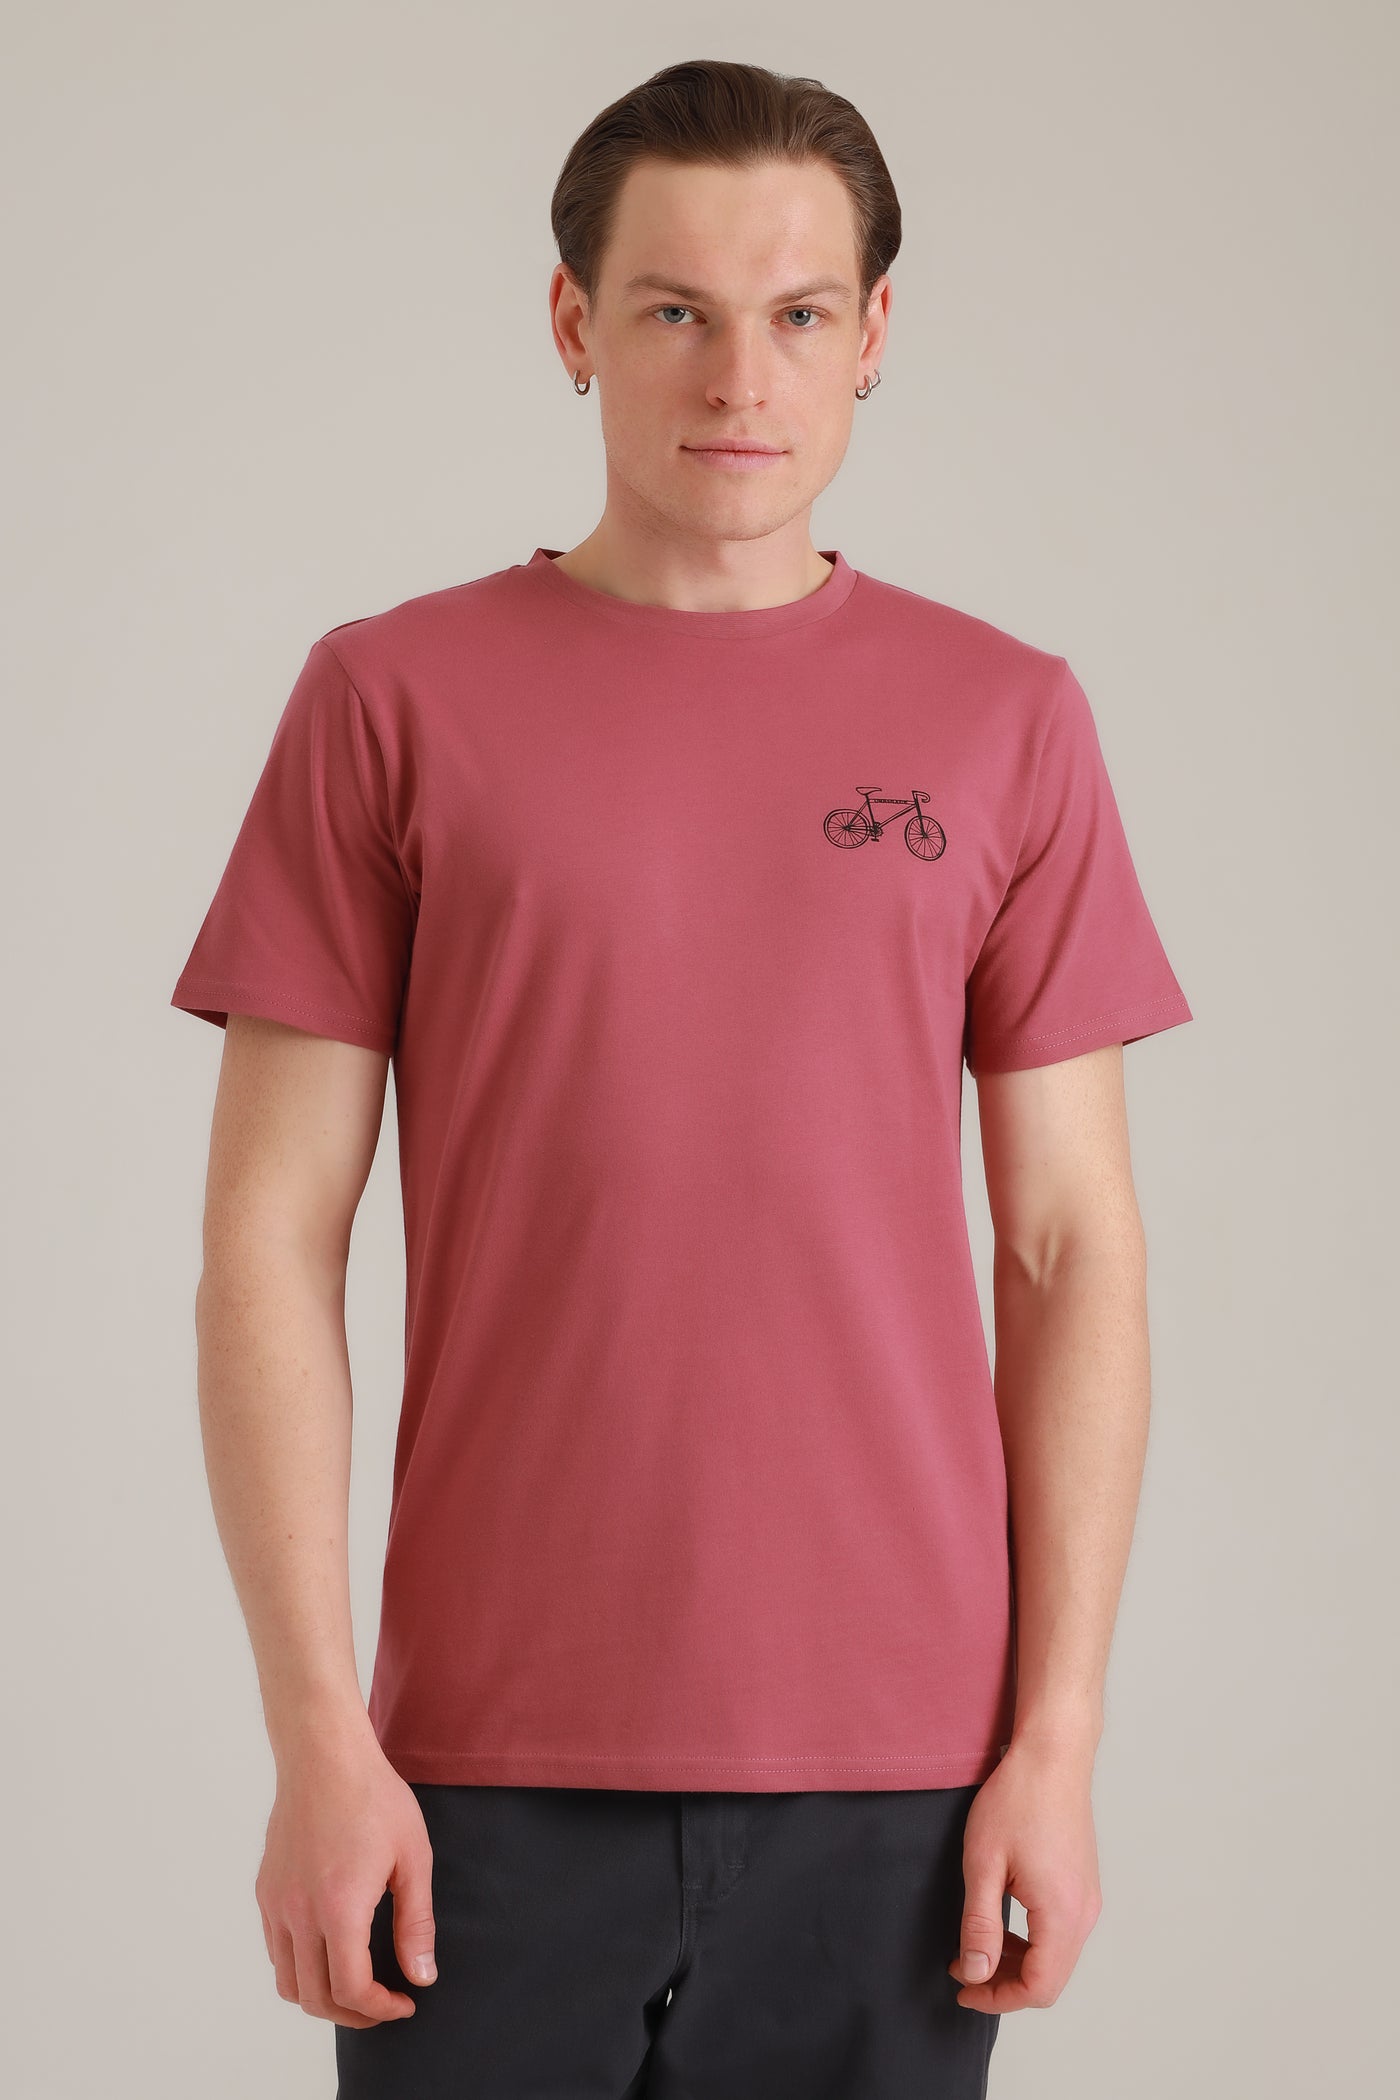 T-Shirt Men Bike Hawthorn Rose